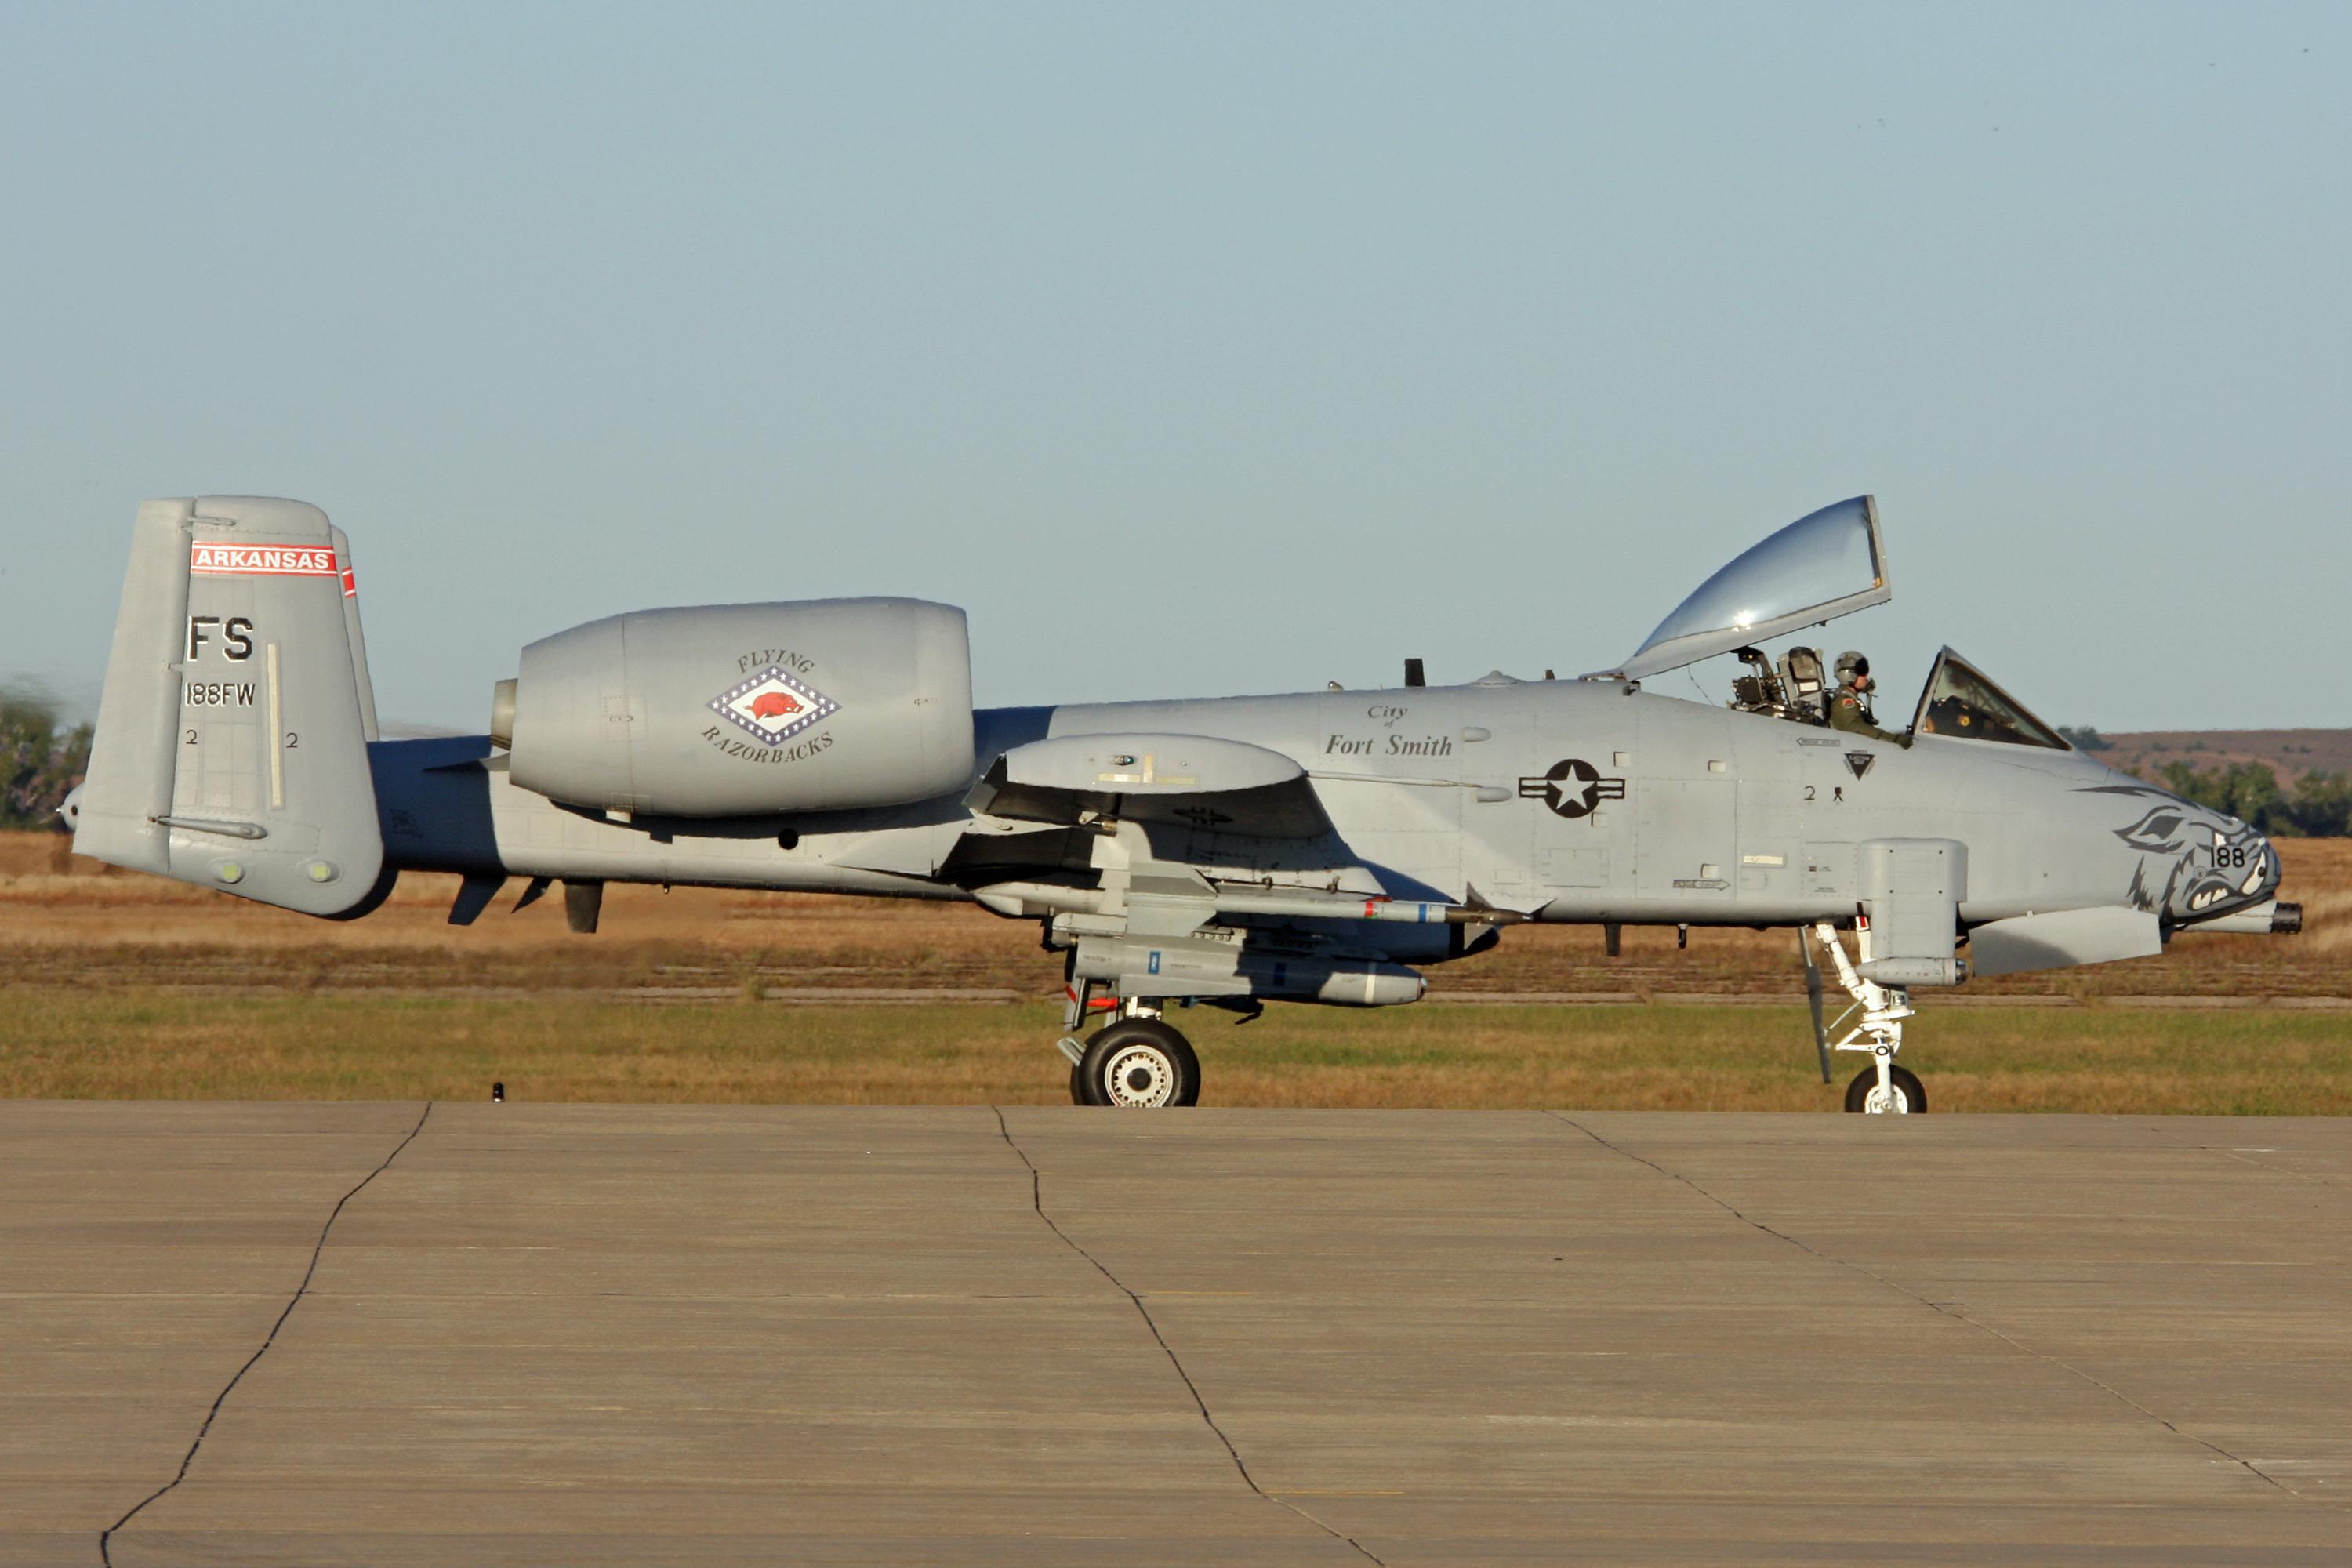 184 Fighter Squadron (188 FW), The Flying Razorbacks at Fort Smith, Arkansas